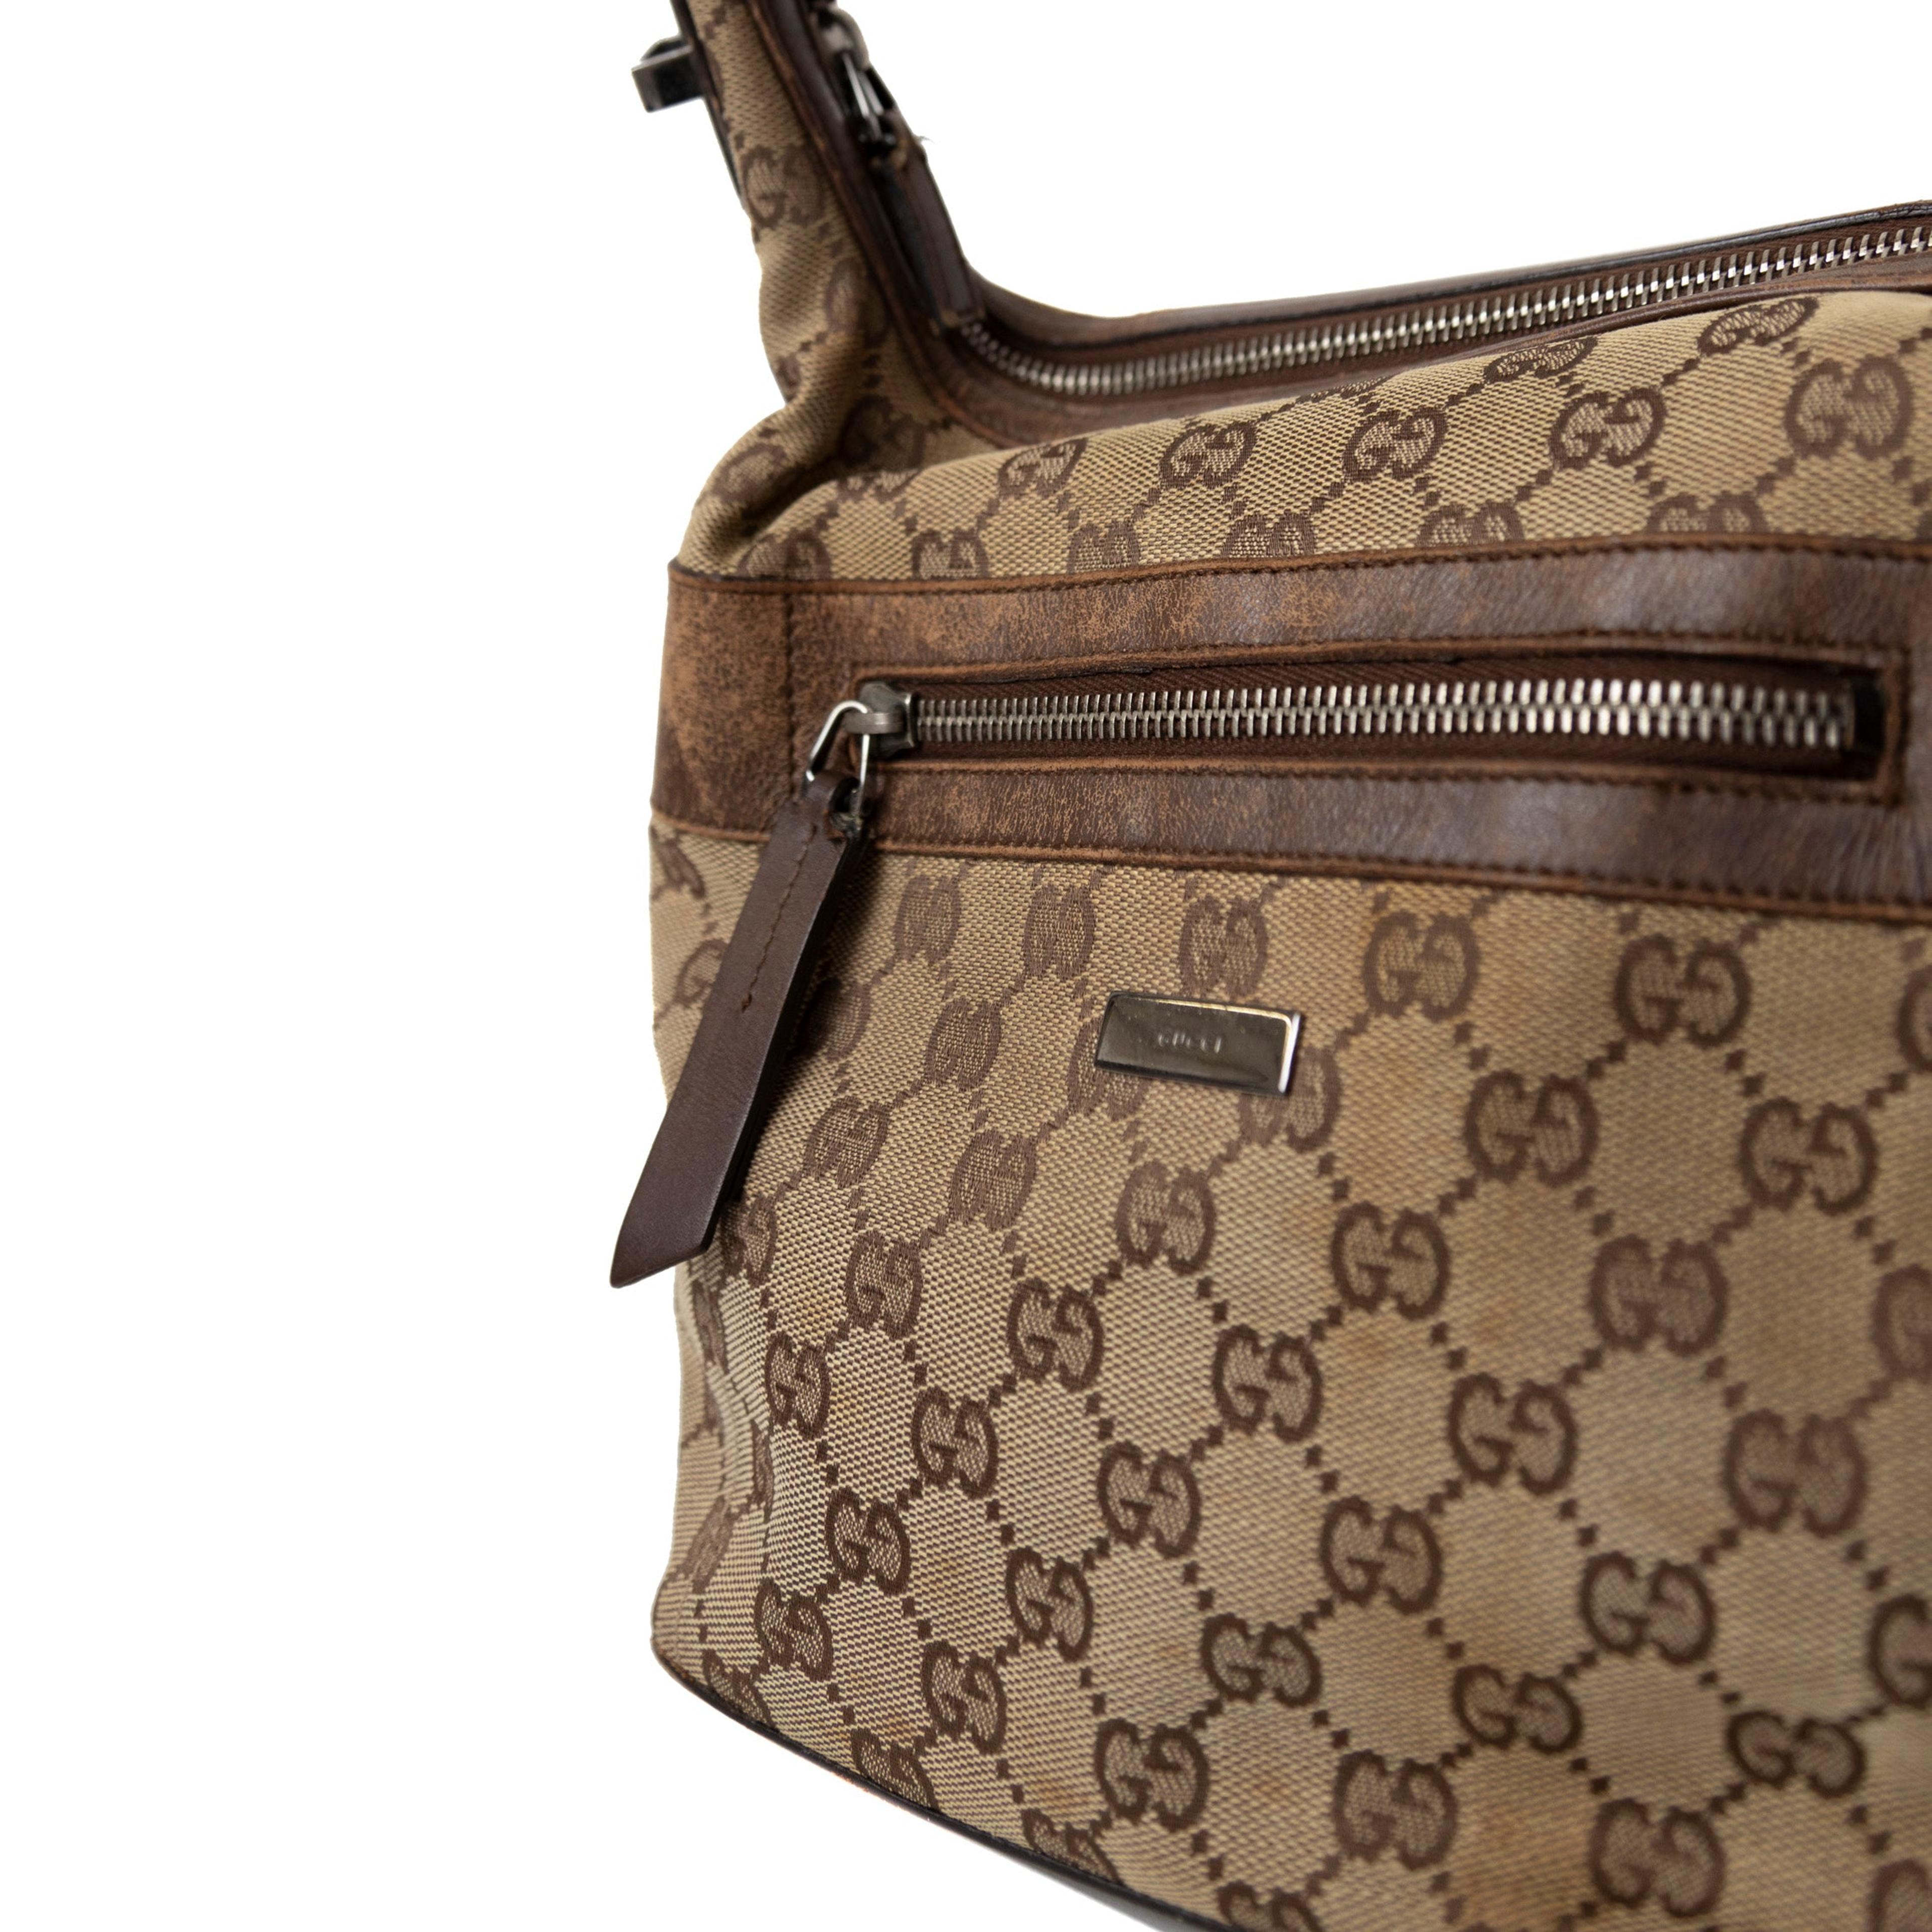 Alternate View 1 of Gucci Monogram GG Pochette Shoulder Bag